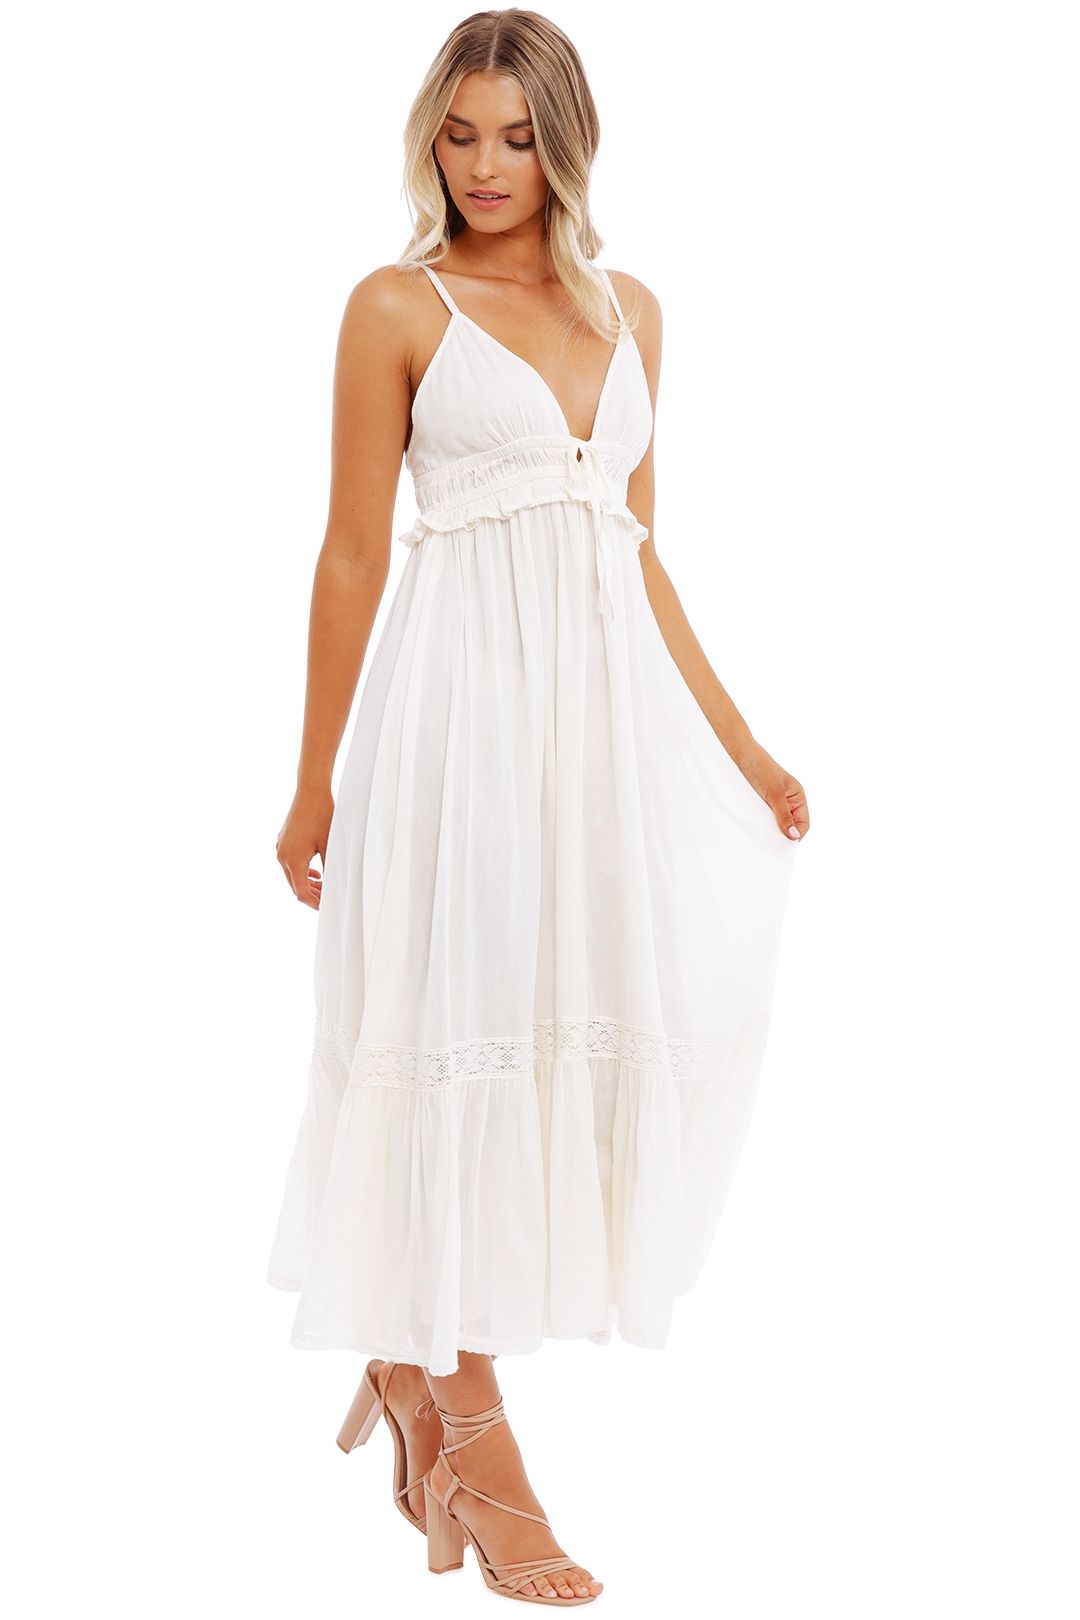 Spell Magnolia Soiree Dress Antique White sleeveless